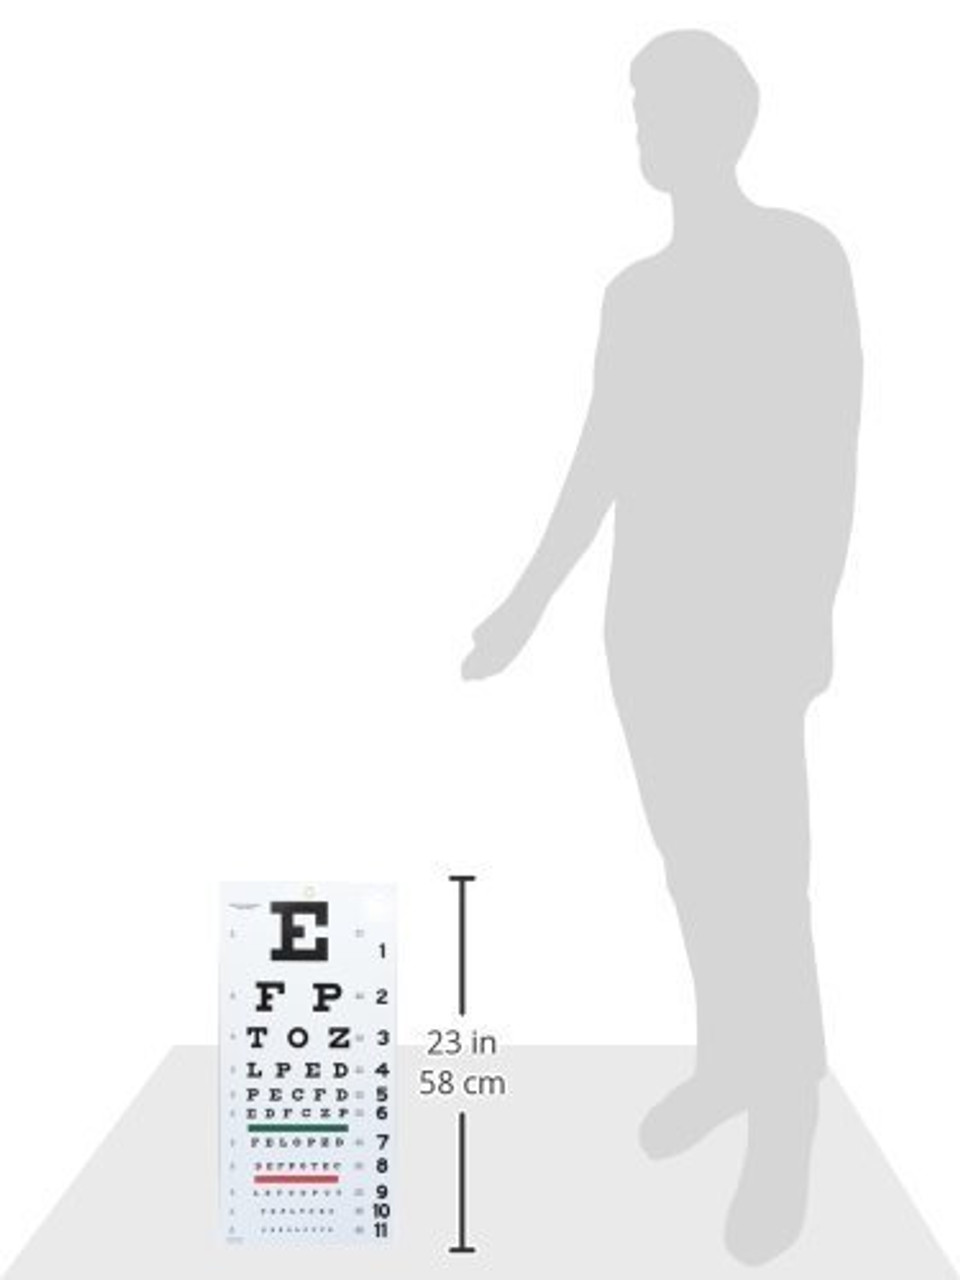 Snellen EFP & Kindergarten Color Distance Vision Eye Chart 20 Feet